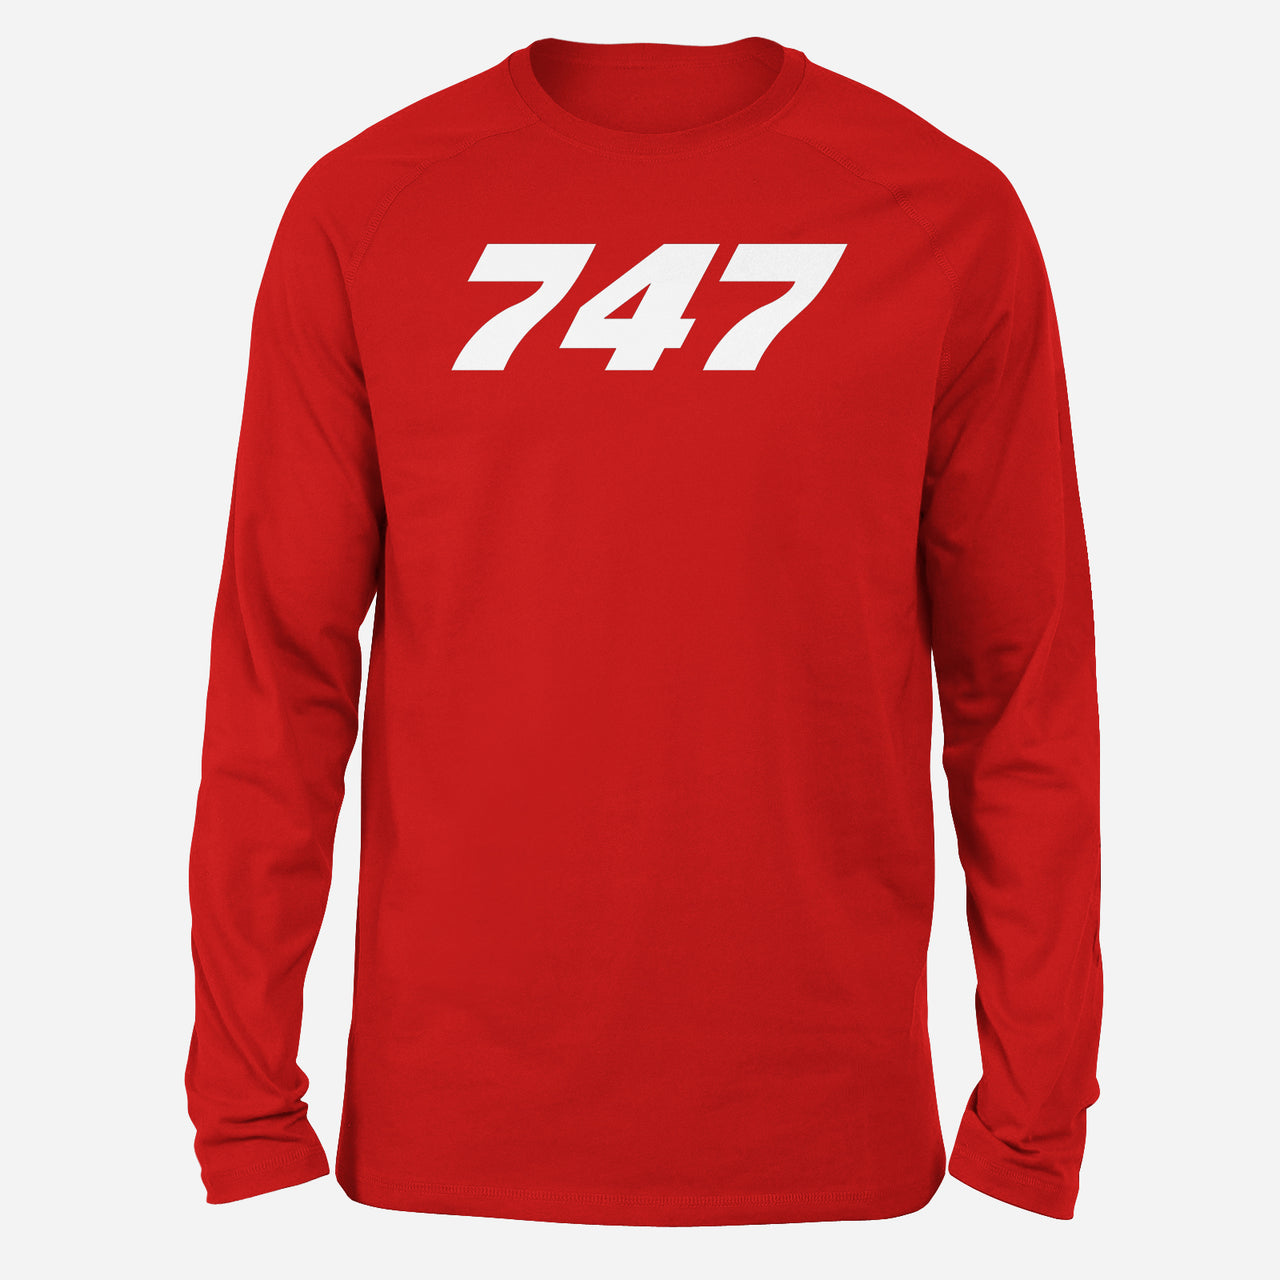 747 Flat Text Designed Long-Sleeve T-Shirts